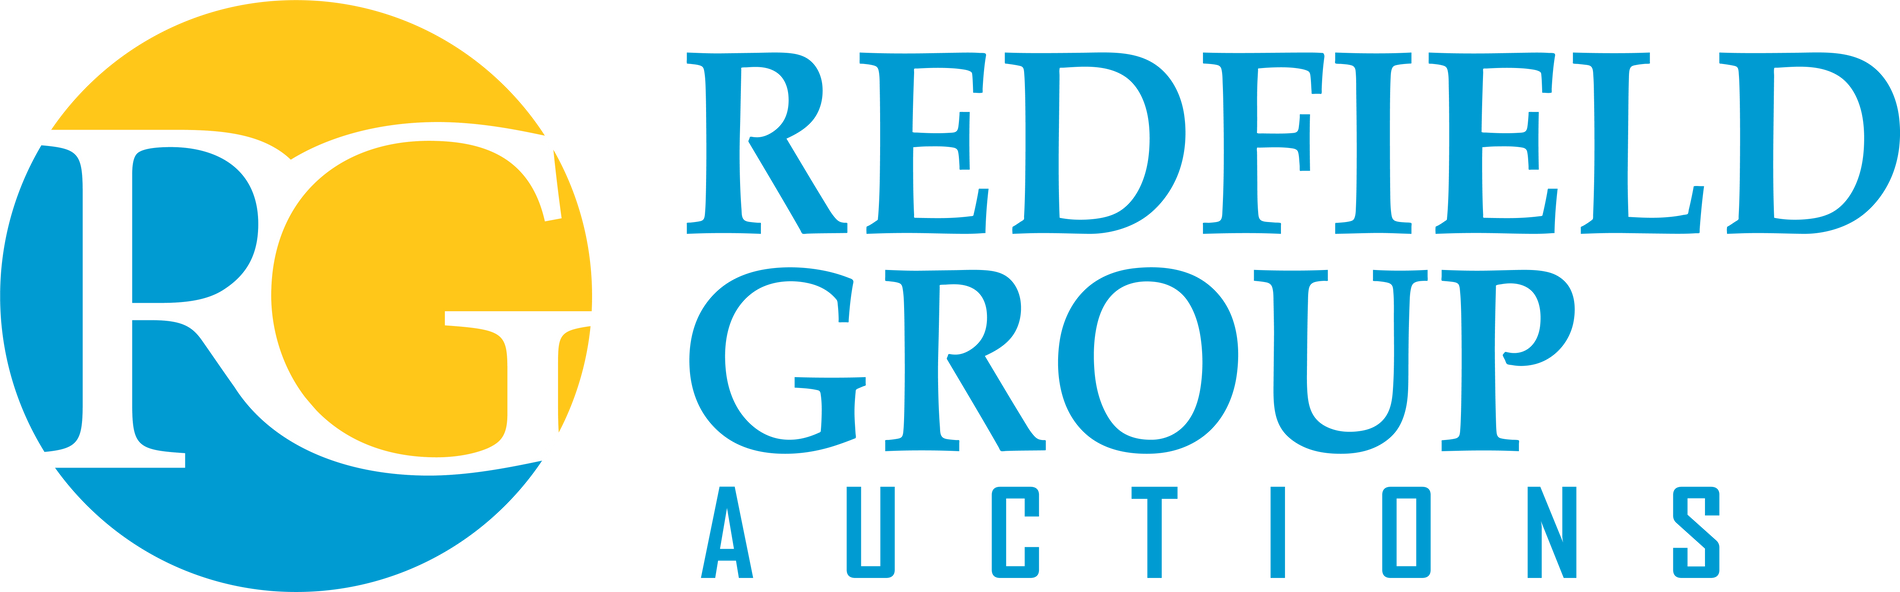 Redfield group logo